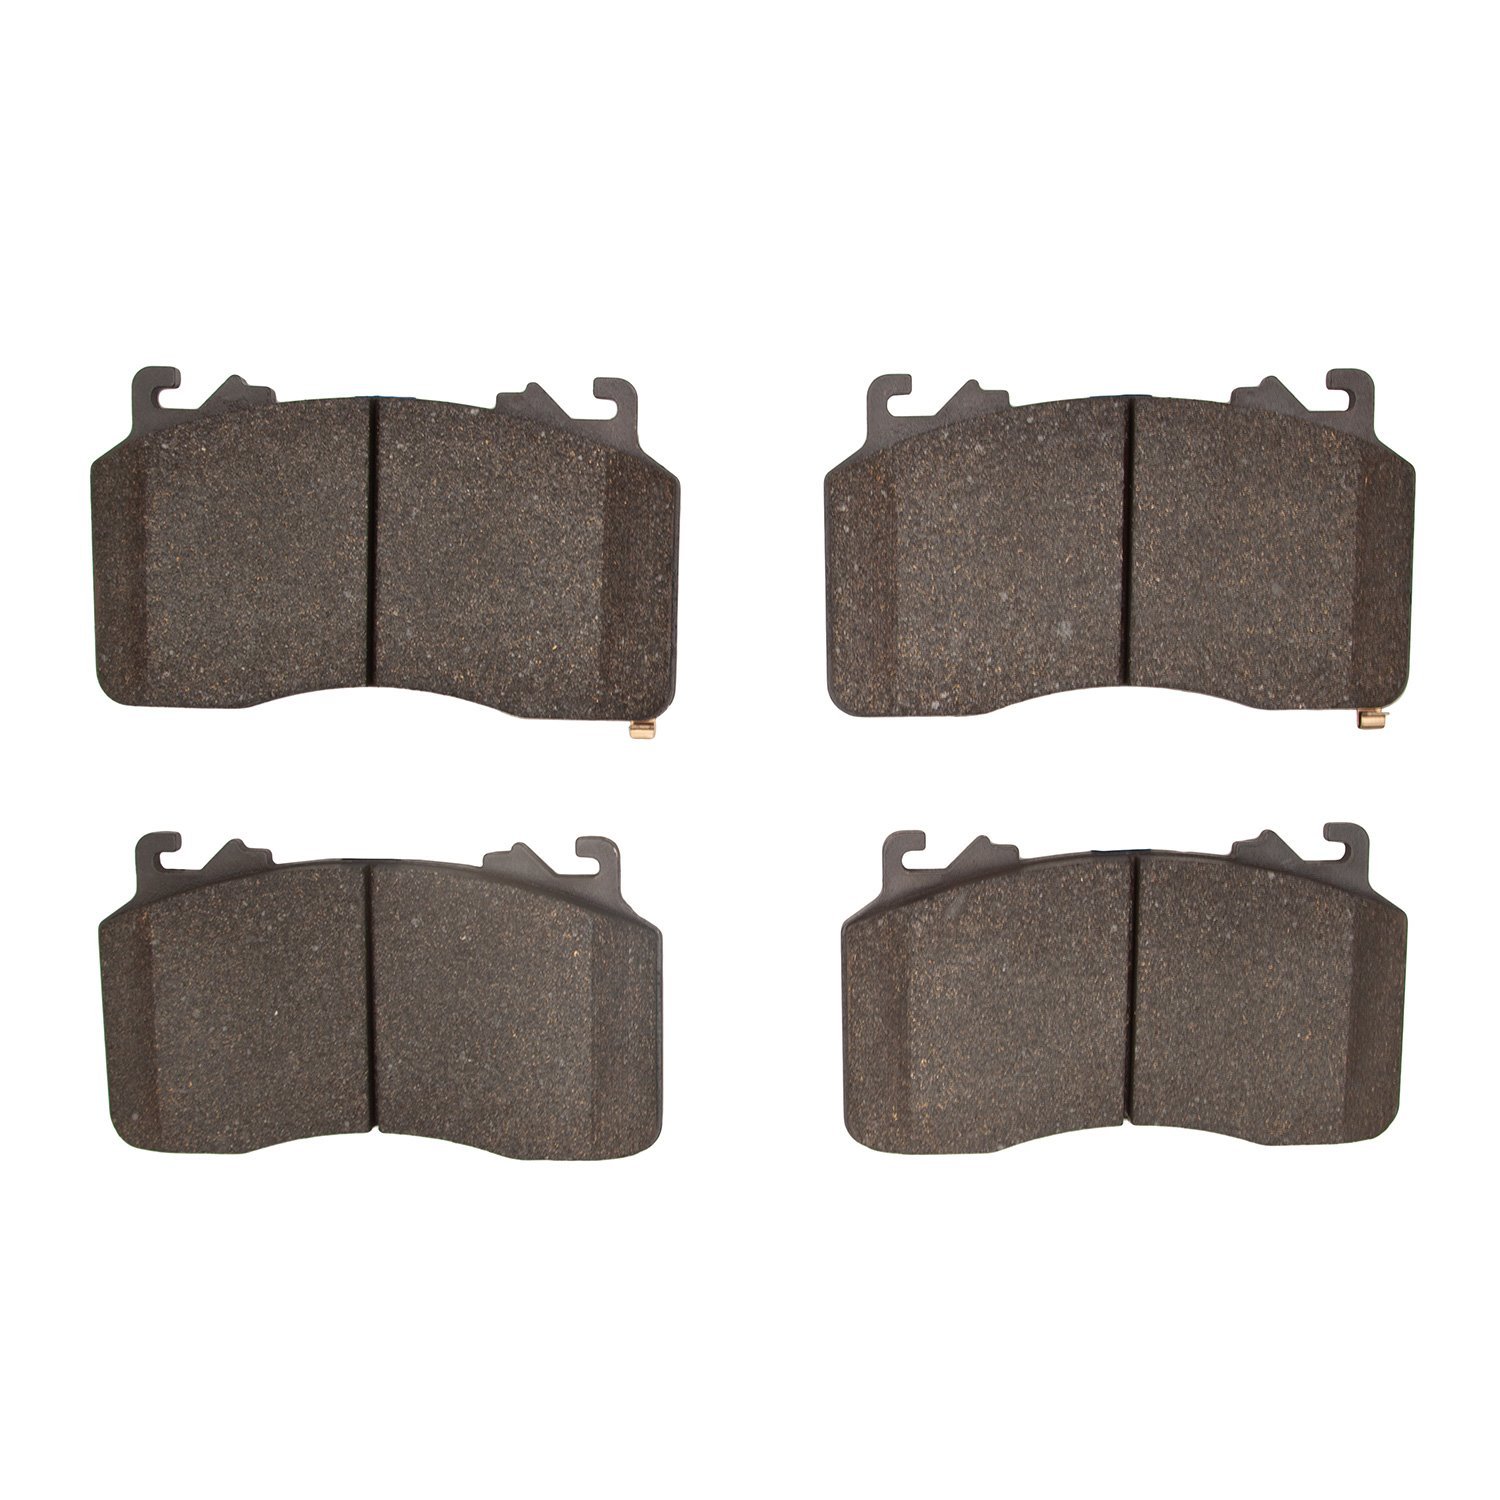 5000 Advanced Low-Metallic Brake Pads, Fits Select